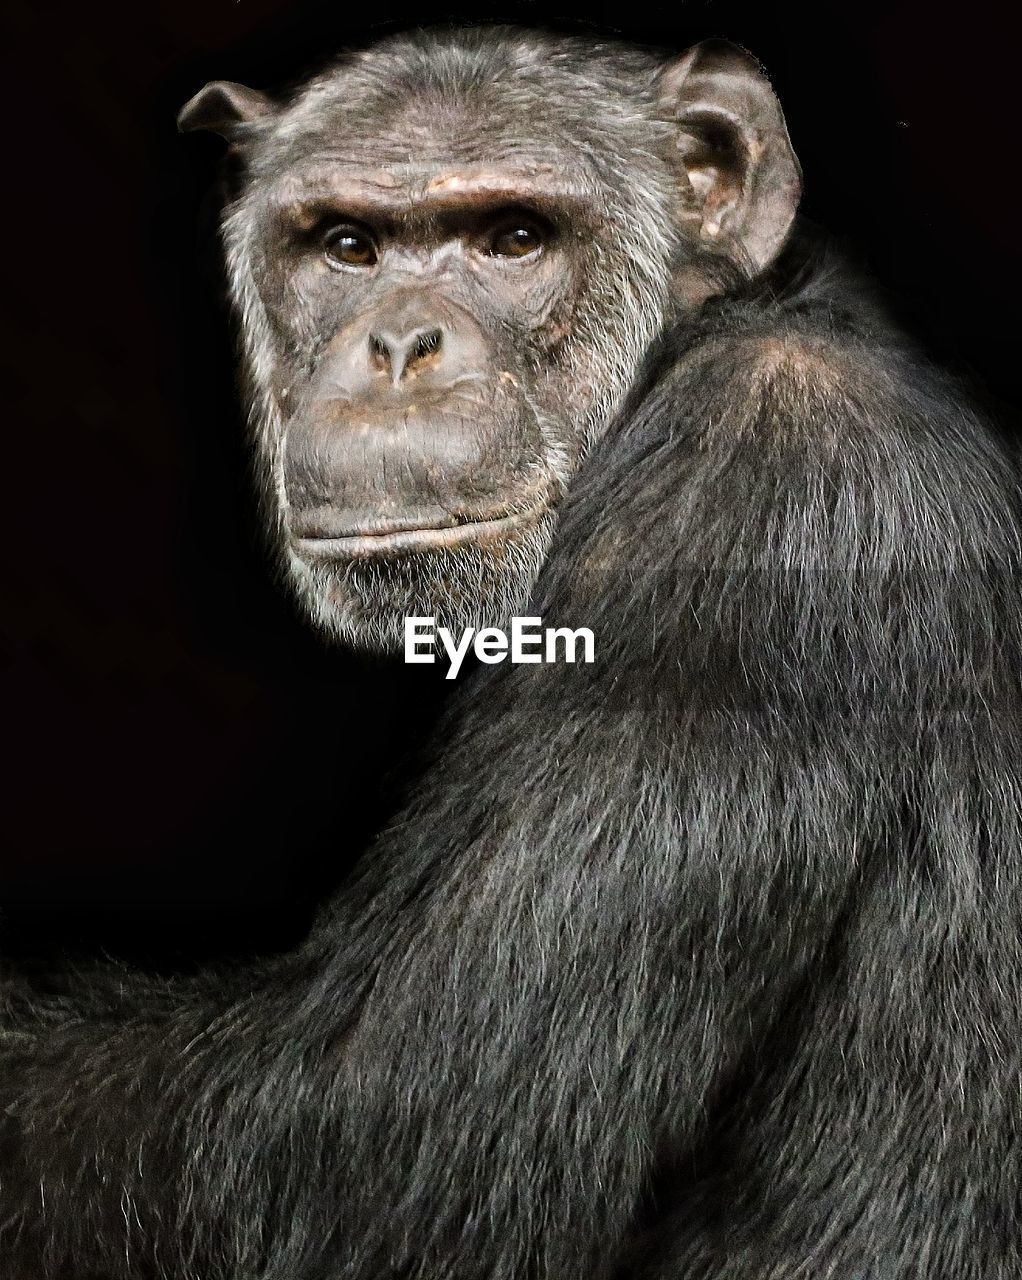 Close-up portrait of gorilla over black background